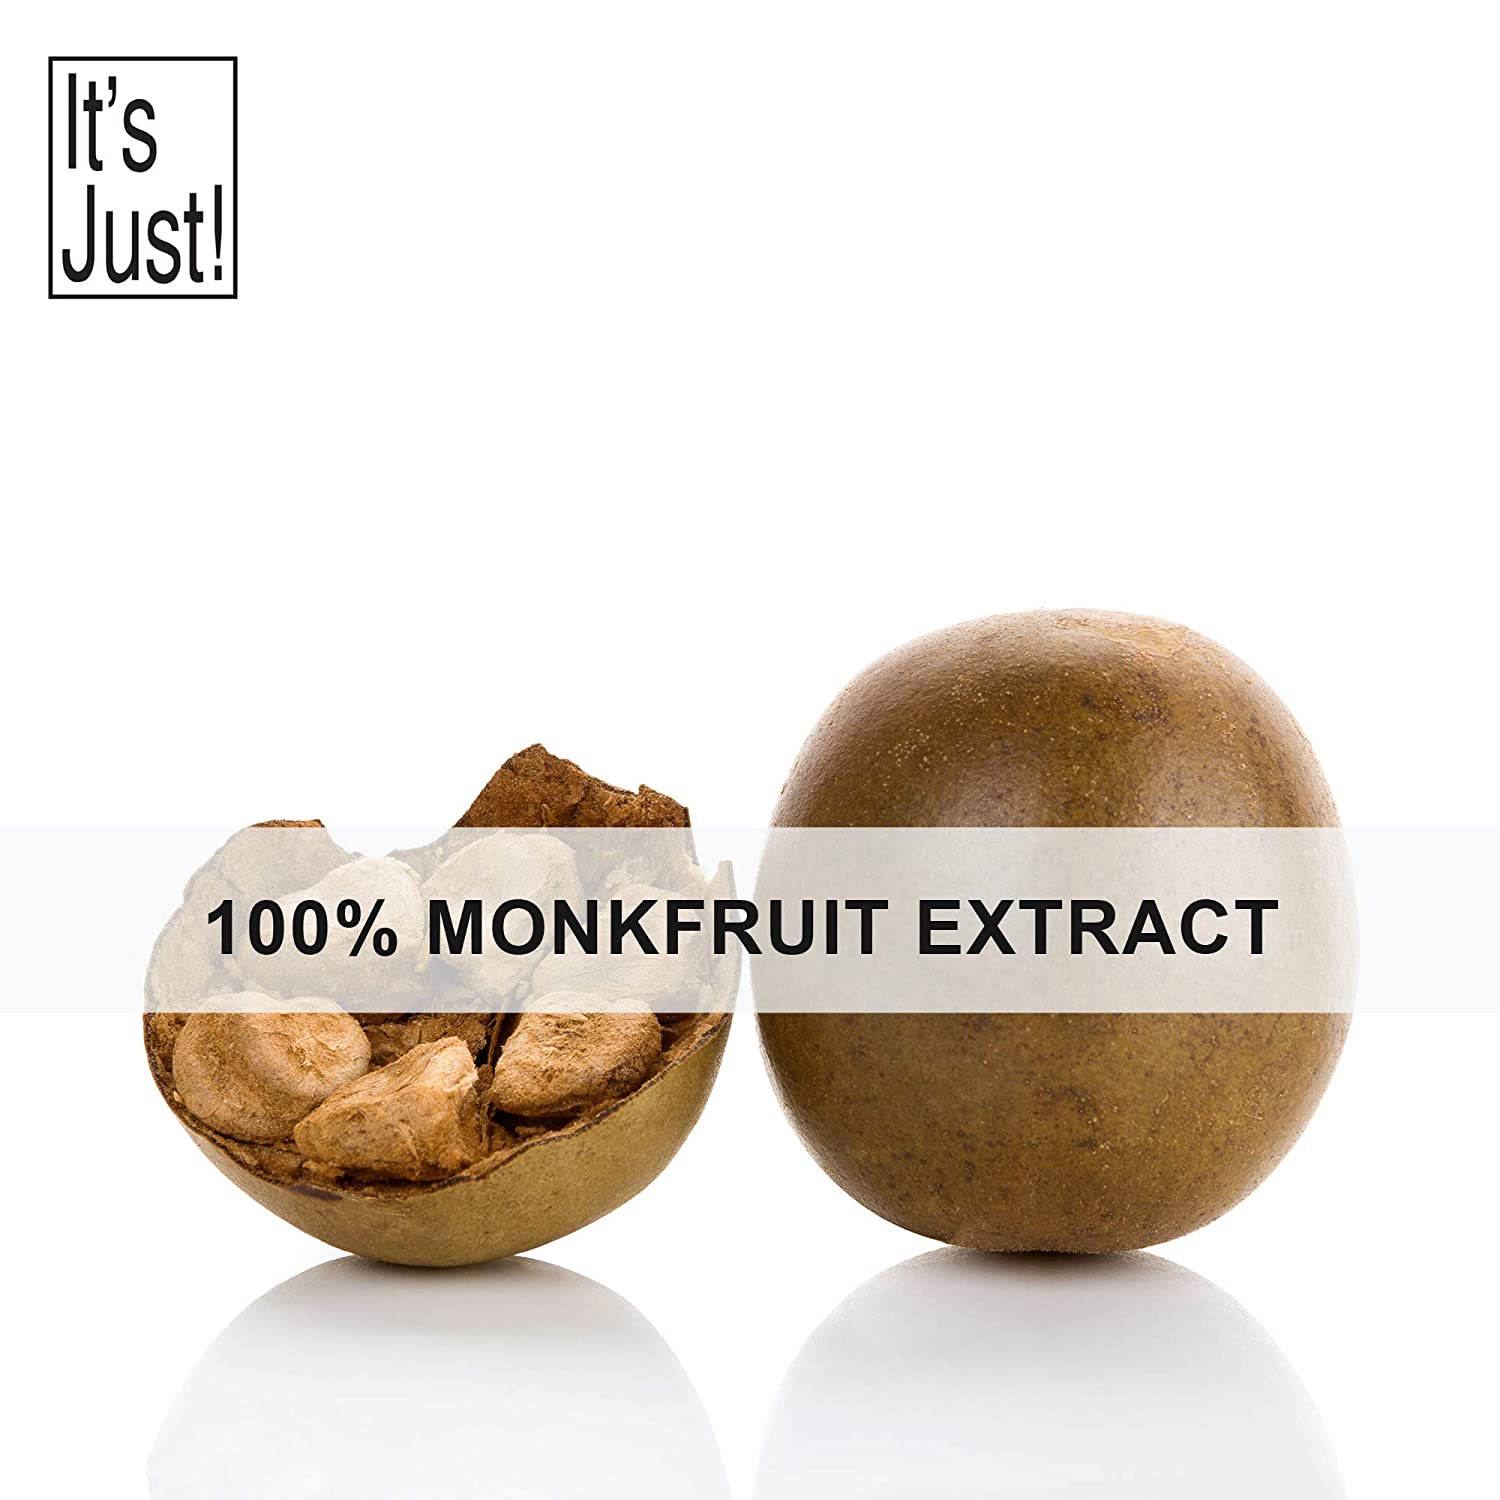 It's Just Monkfruit Extract Powder - 1.5 oz-2